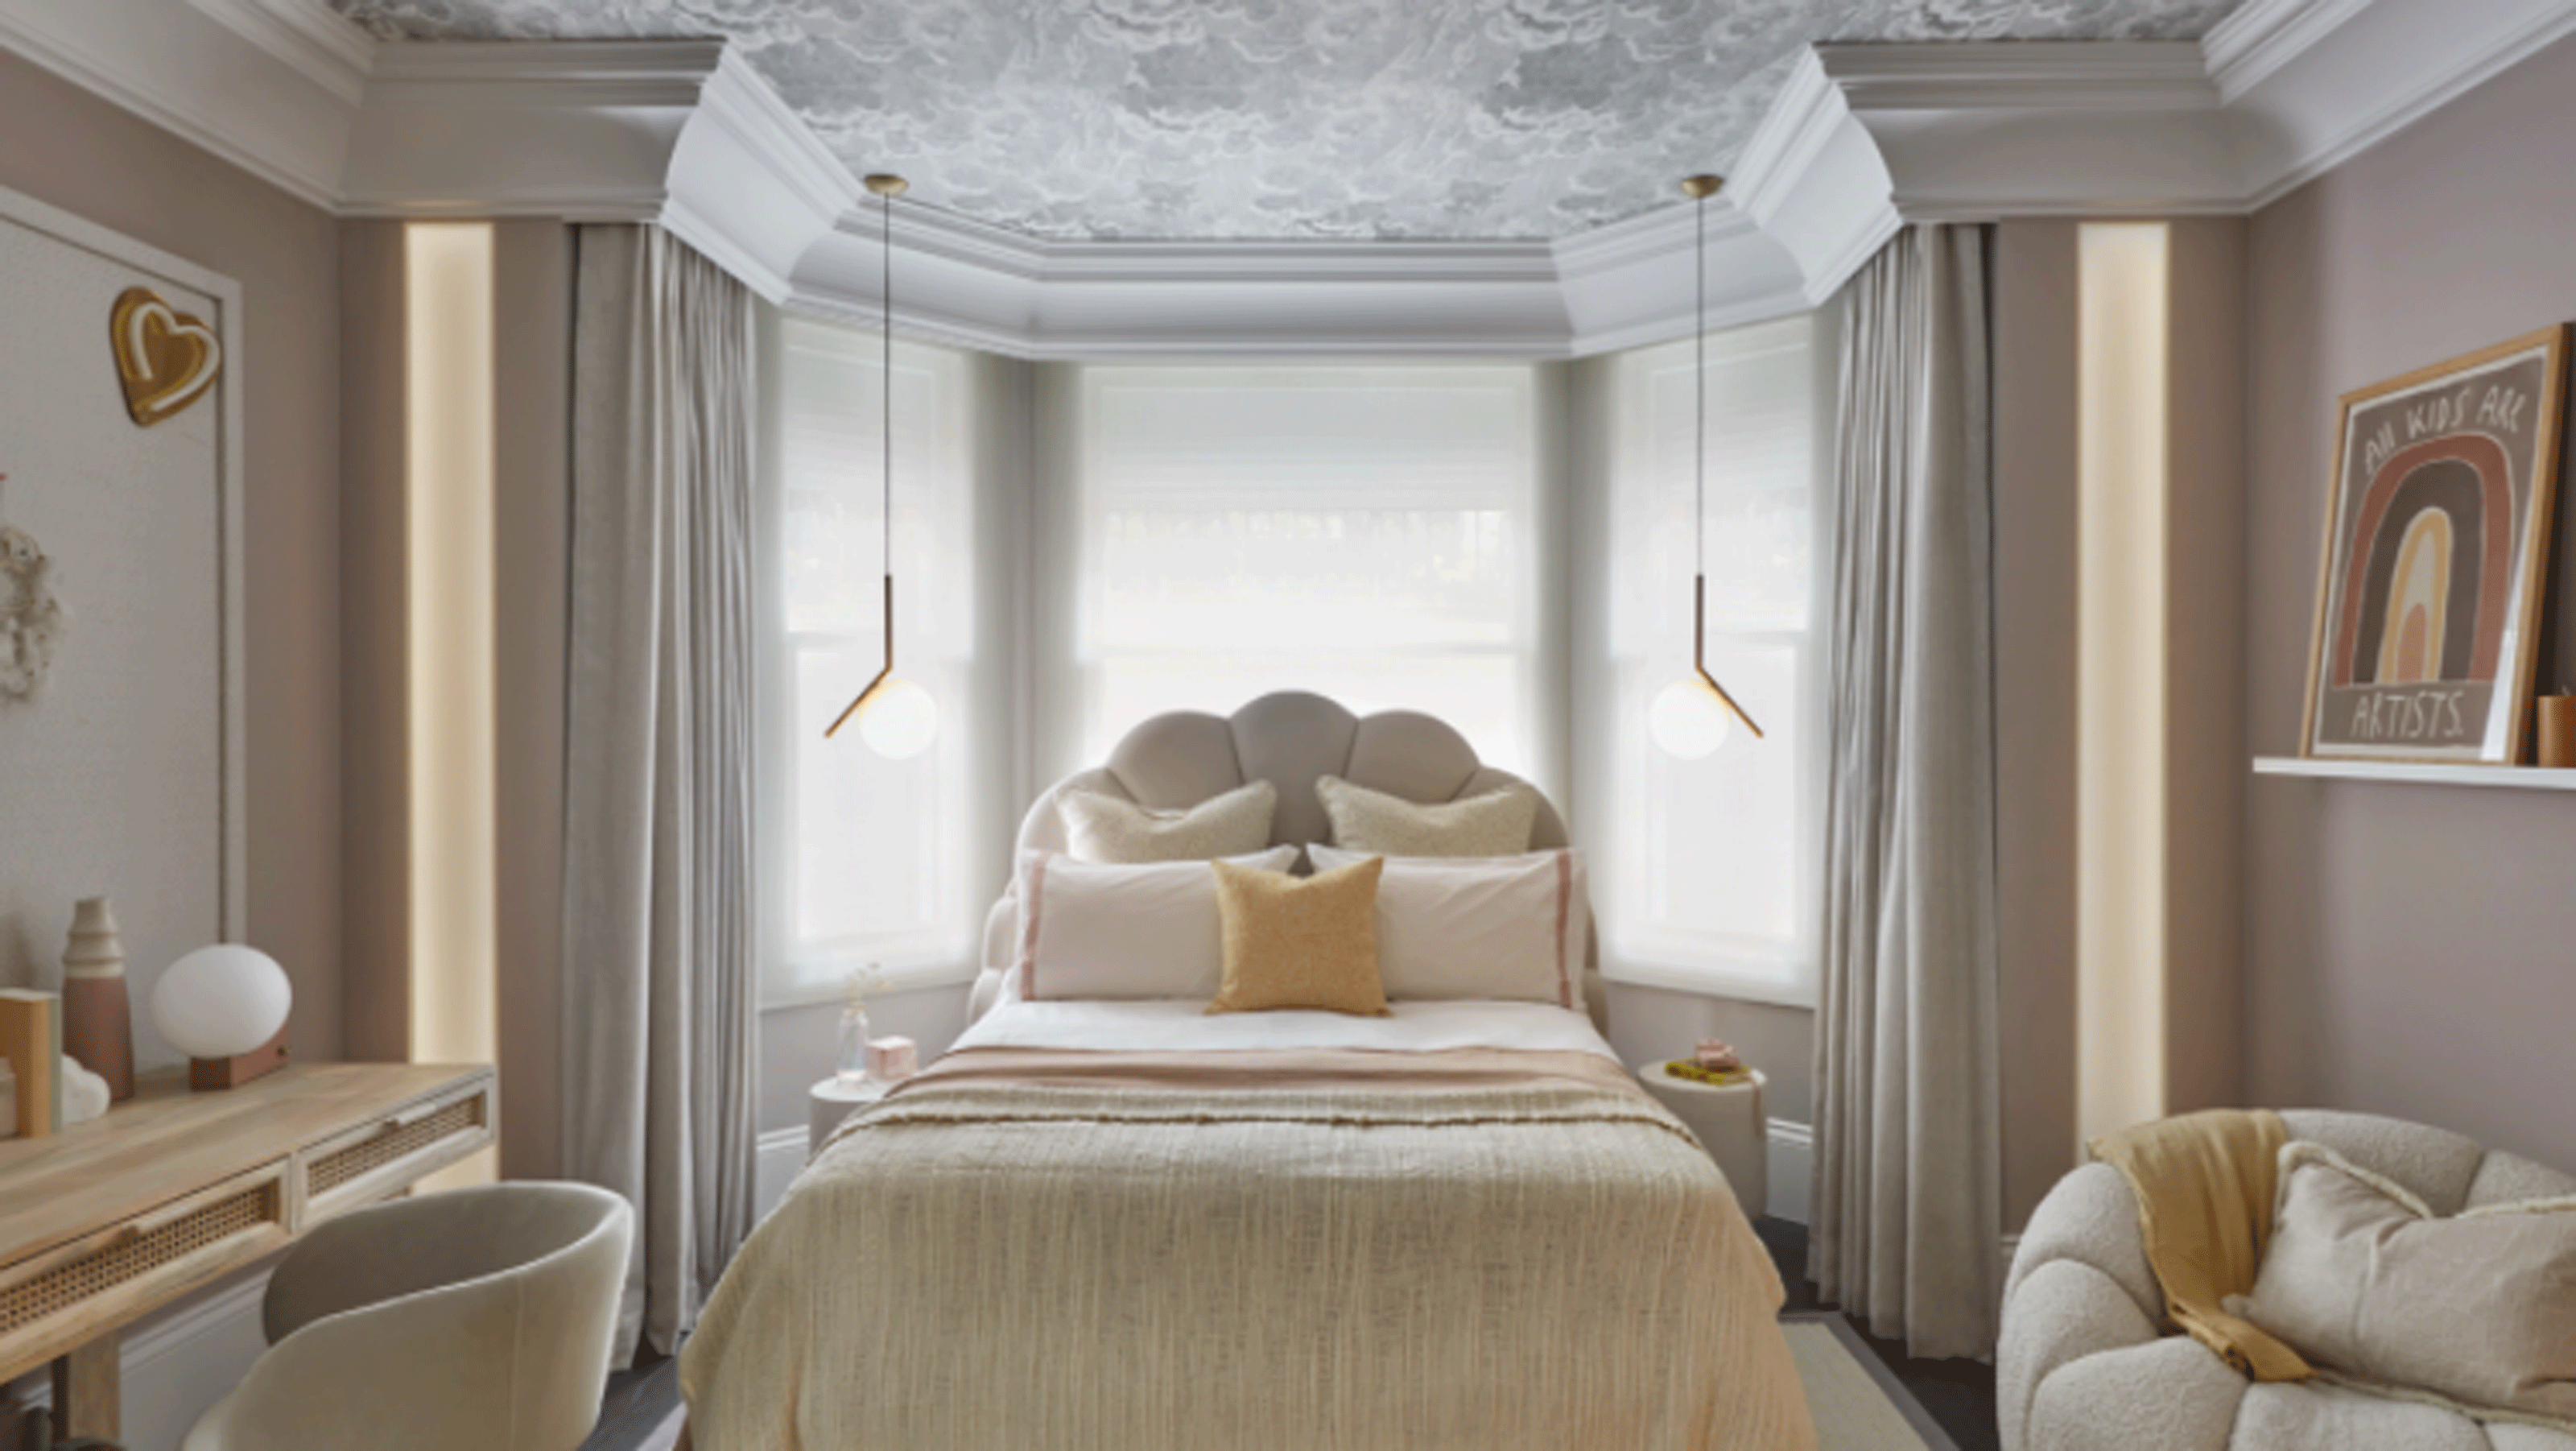 Beige bedroom ideas – 20 fresh looks that prove beige is back ...